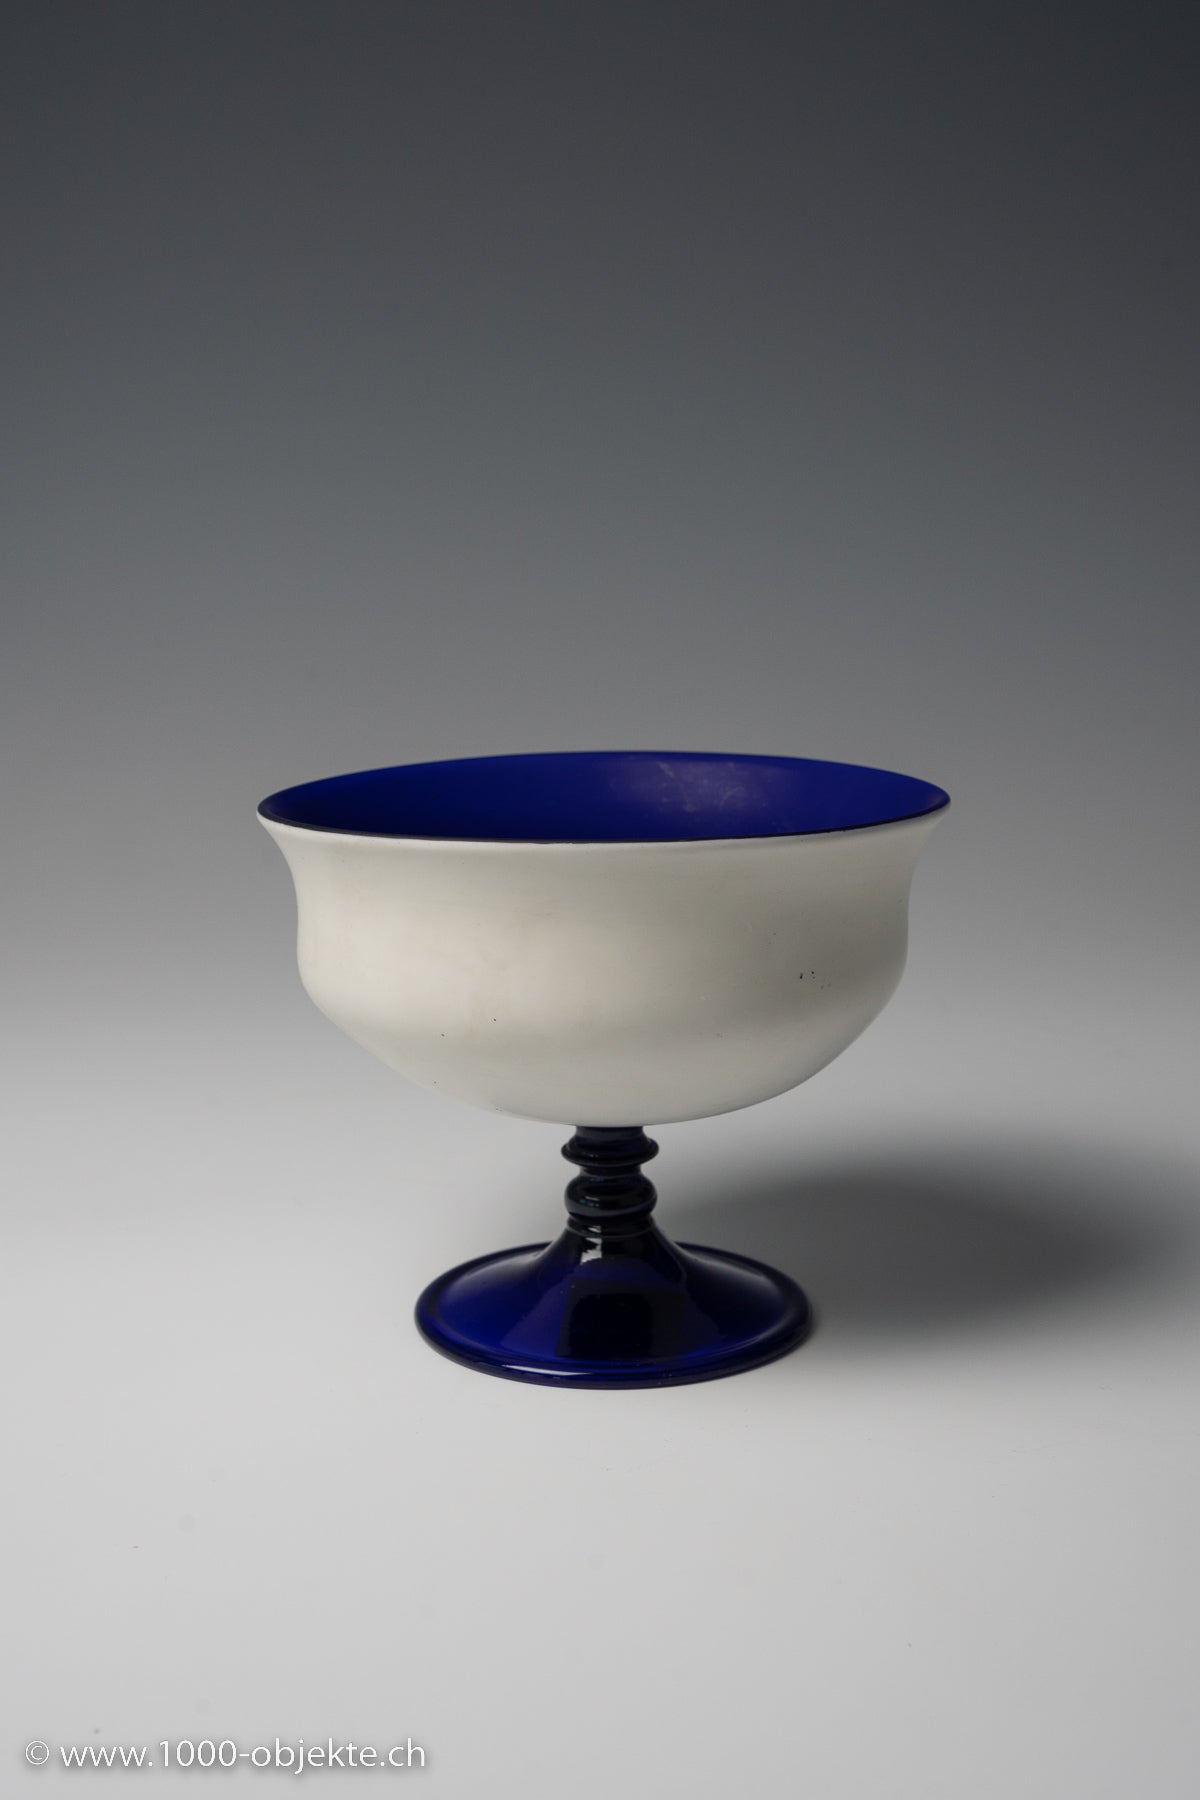 Significant bowl blue white 0paque Cvm Cappellin Venini Ca.1930